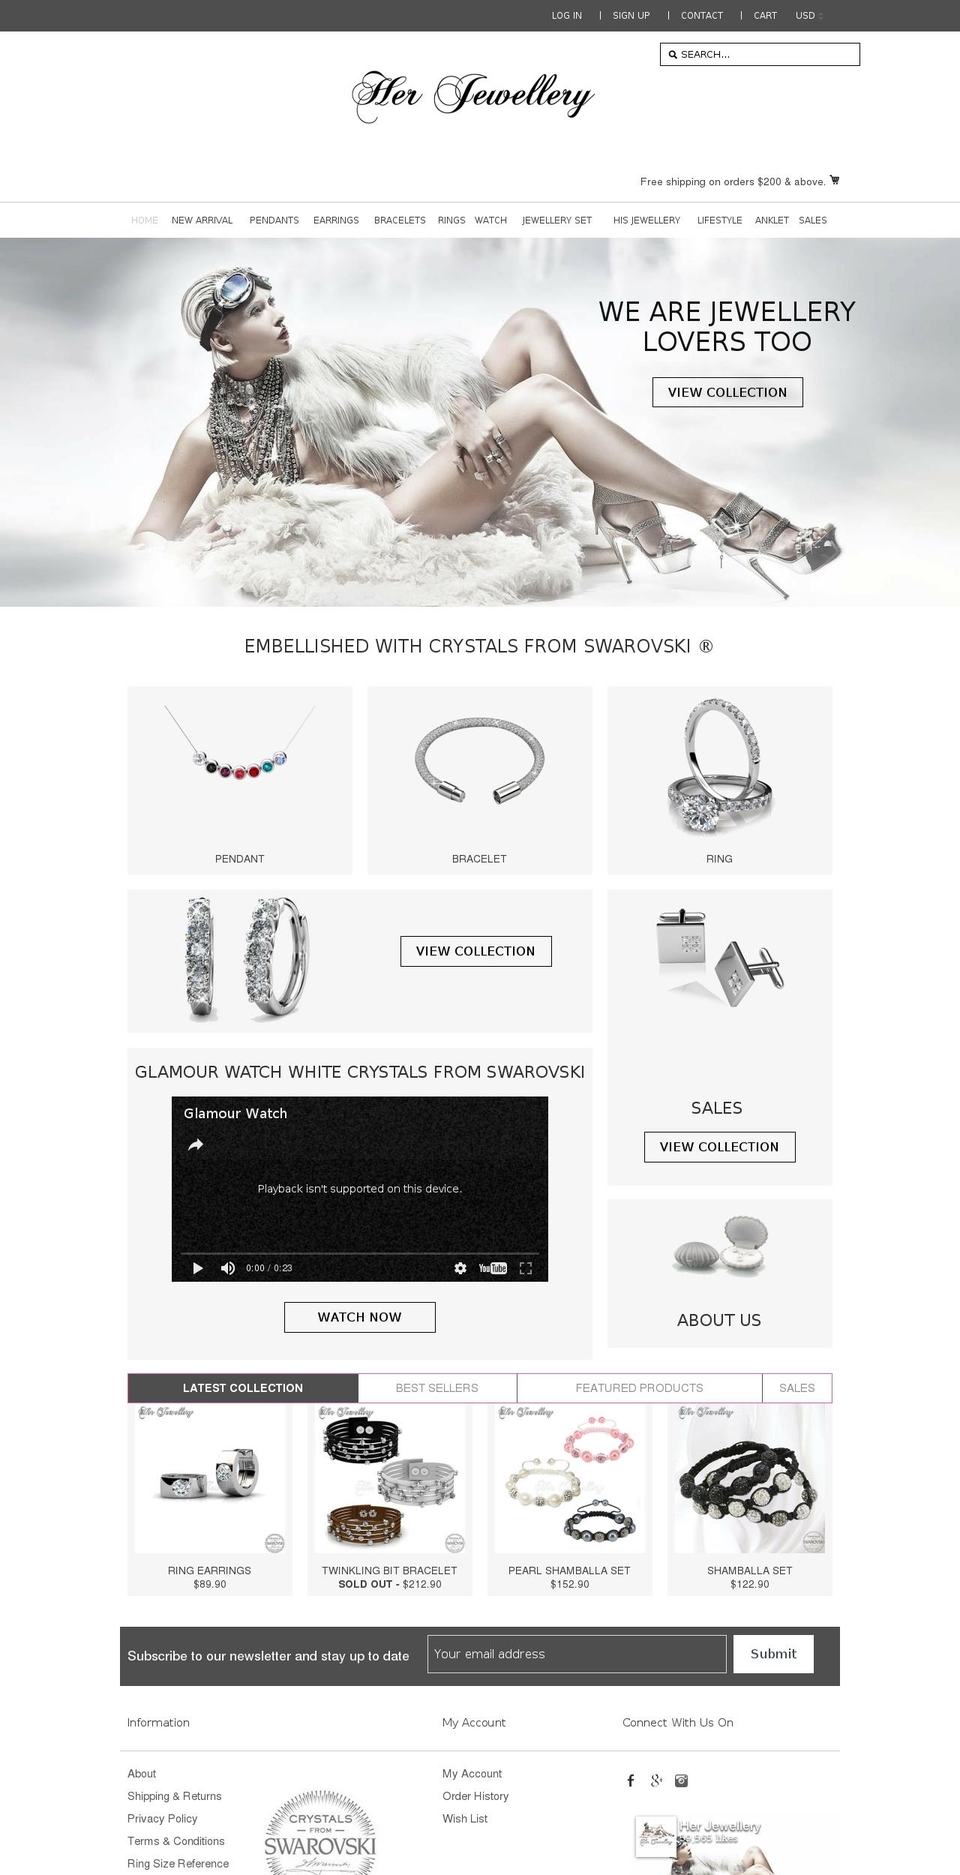 herjewellery.com shopify website screenshot